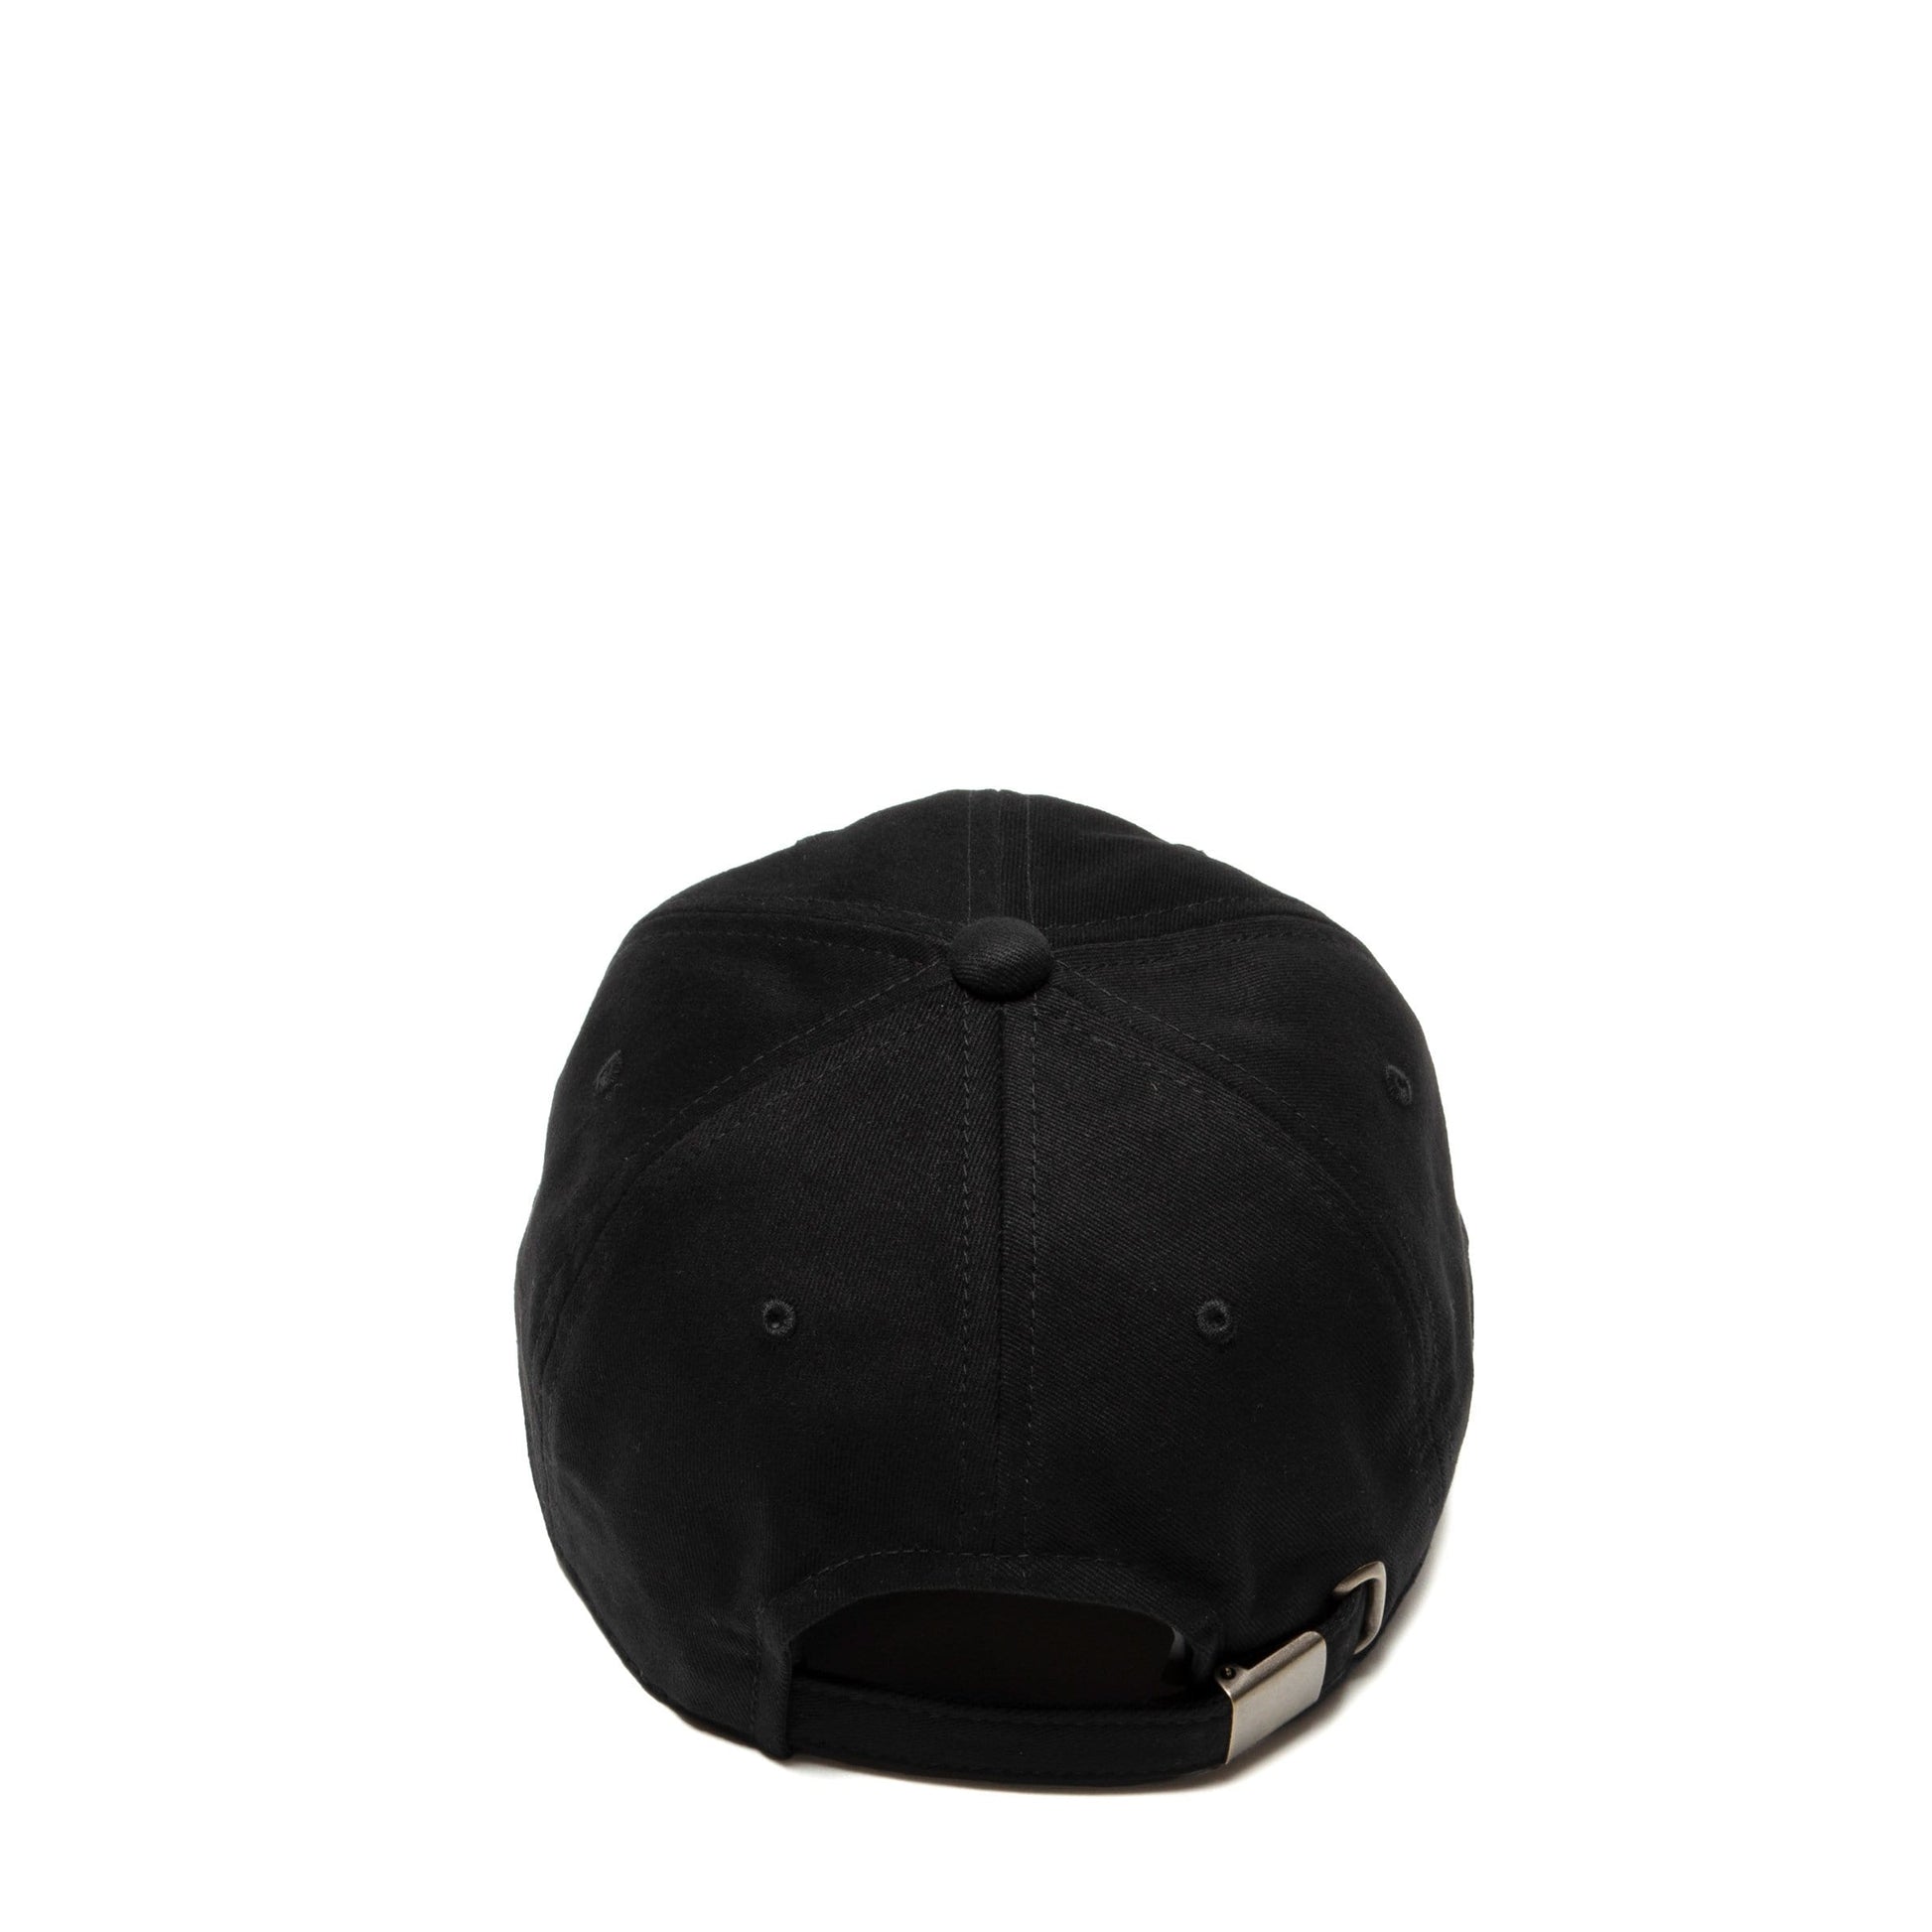 GRINDLONDON Headwear BLACK / O/S / SS2093 RAIN ON MY PRADA CAP